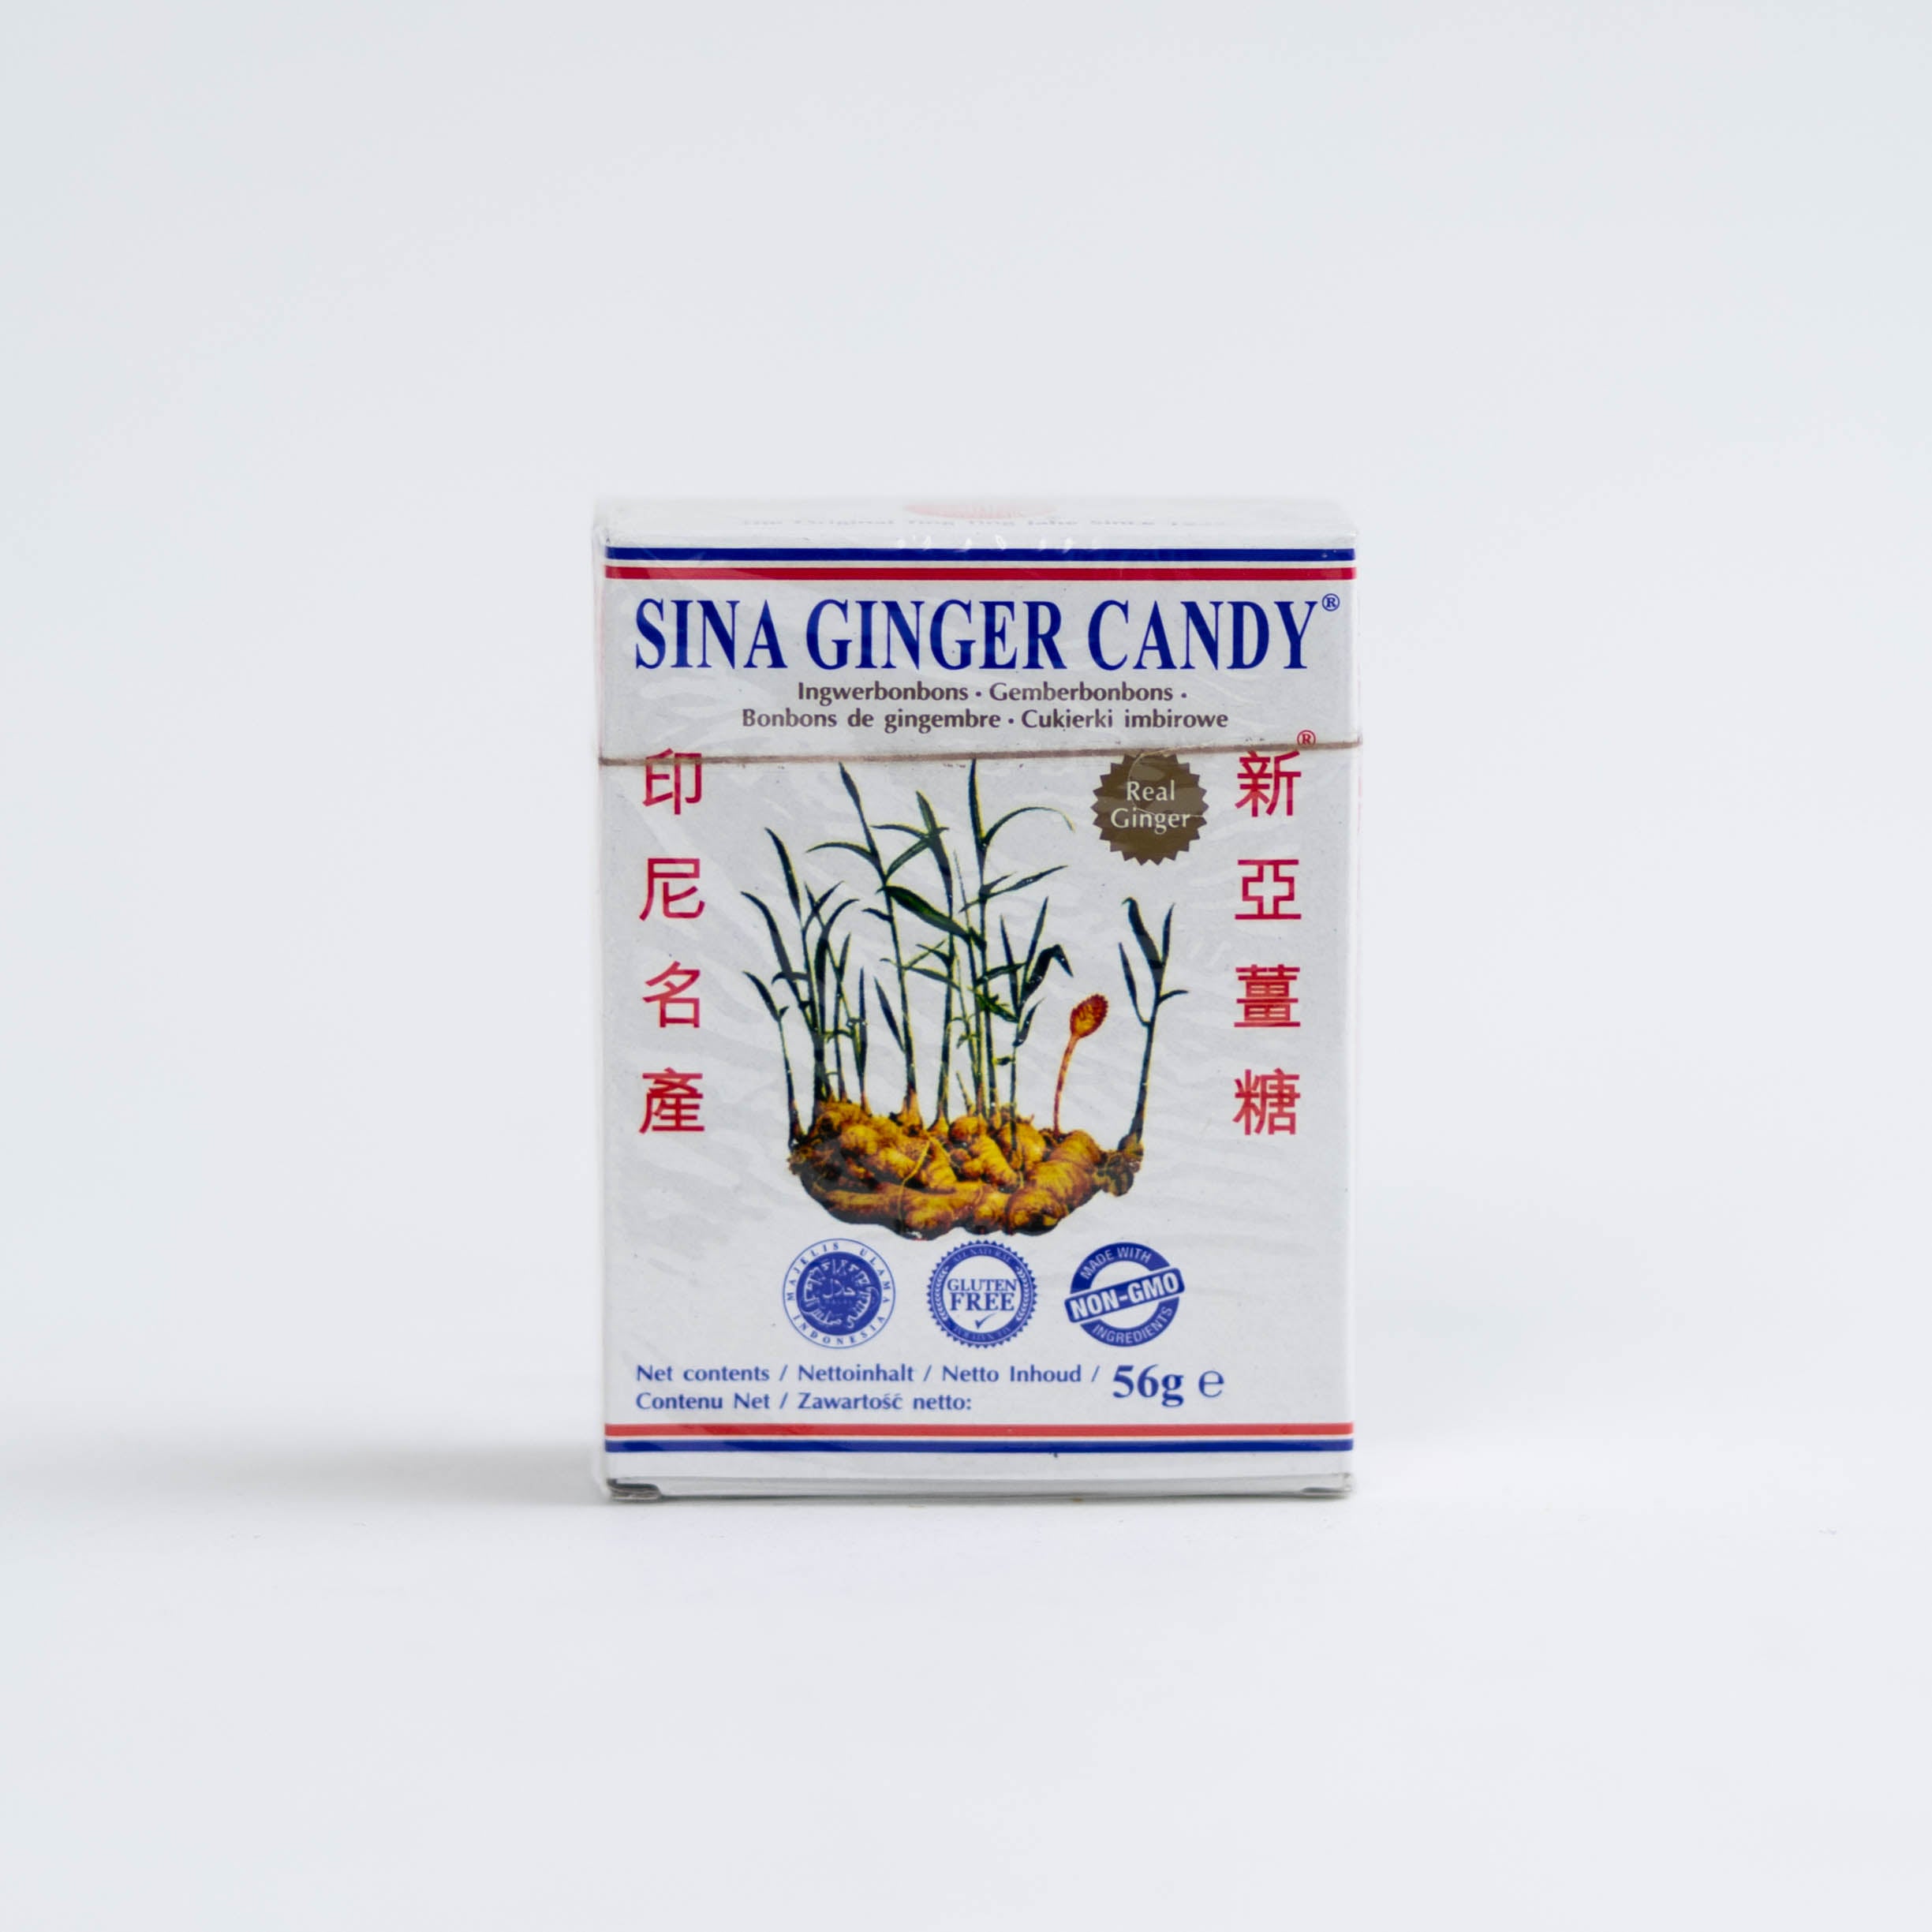 dinese.de sina ginger candy ingwer asiashop onlineshop